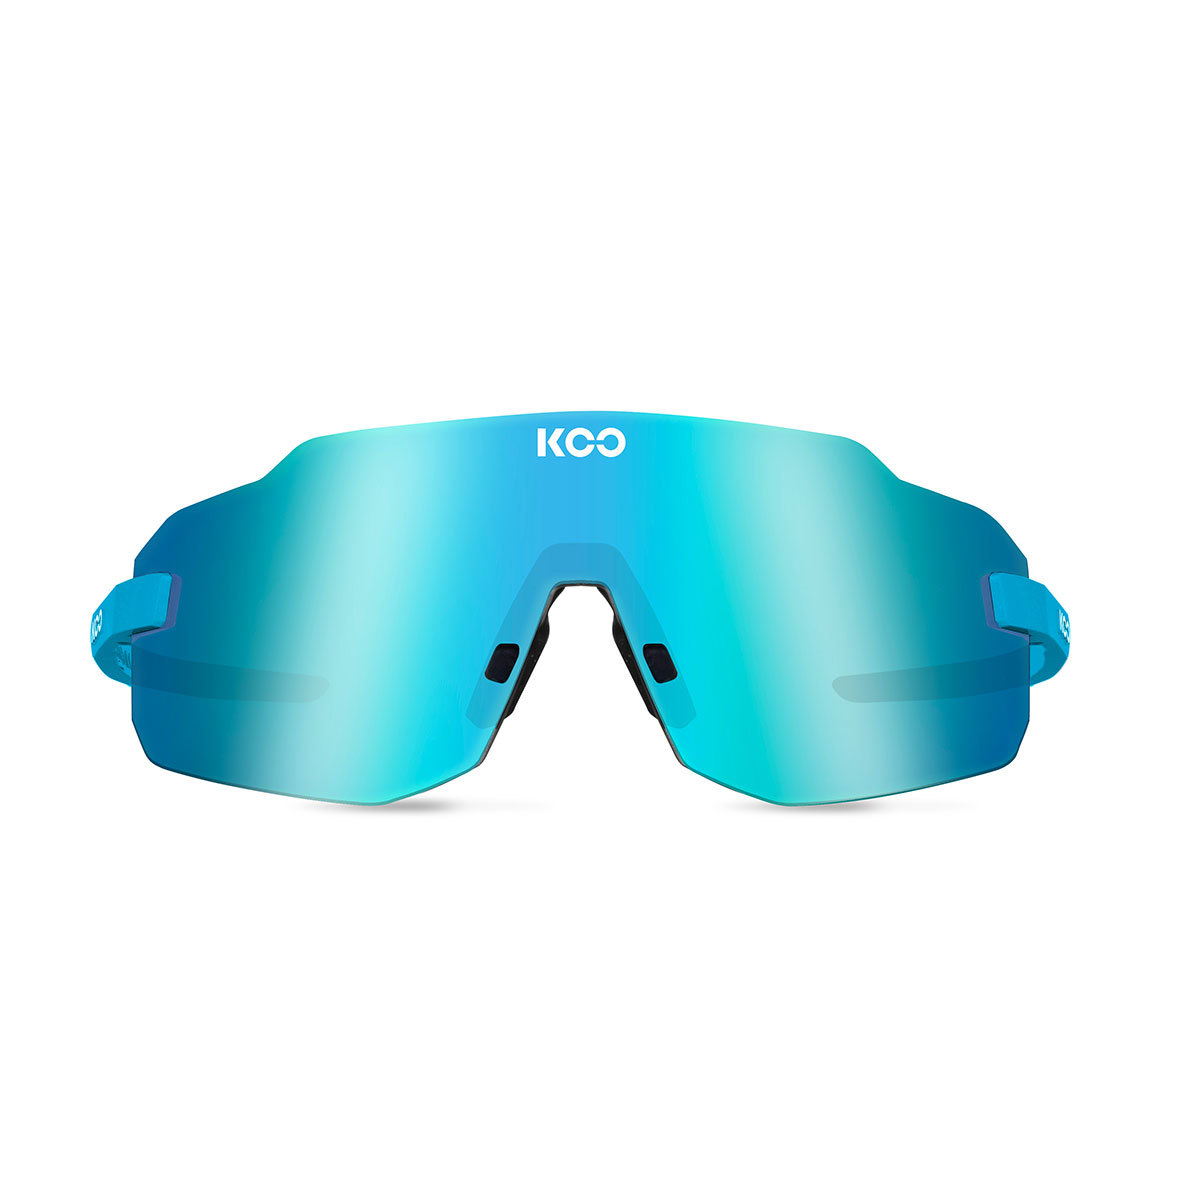 KOO SUPERNOVA Sport Zonnebril Blauw Met Turquoise Mirror Lens